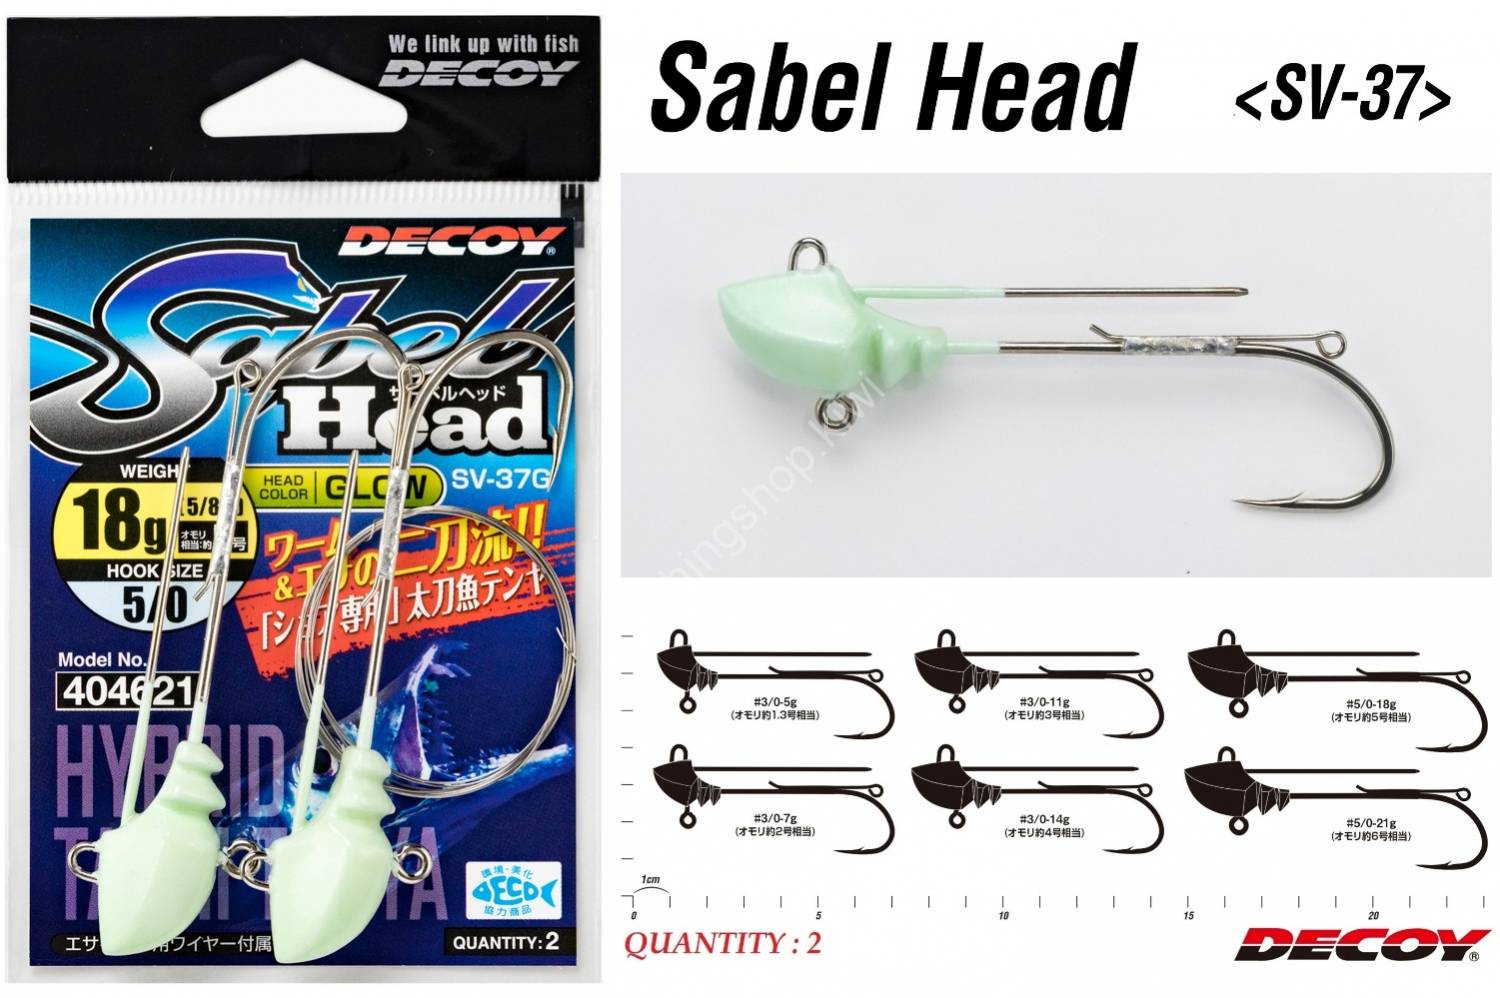 DECOY SV-37G Sabel Head #5/0-21g Glow Hooks, Sinkers, Other buy at